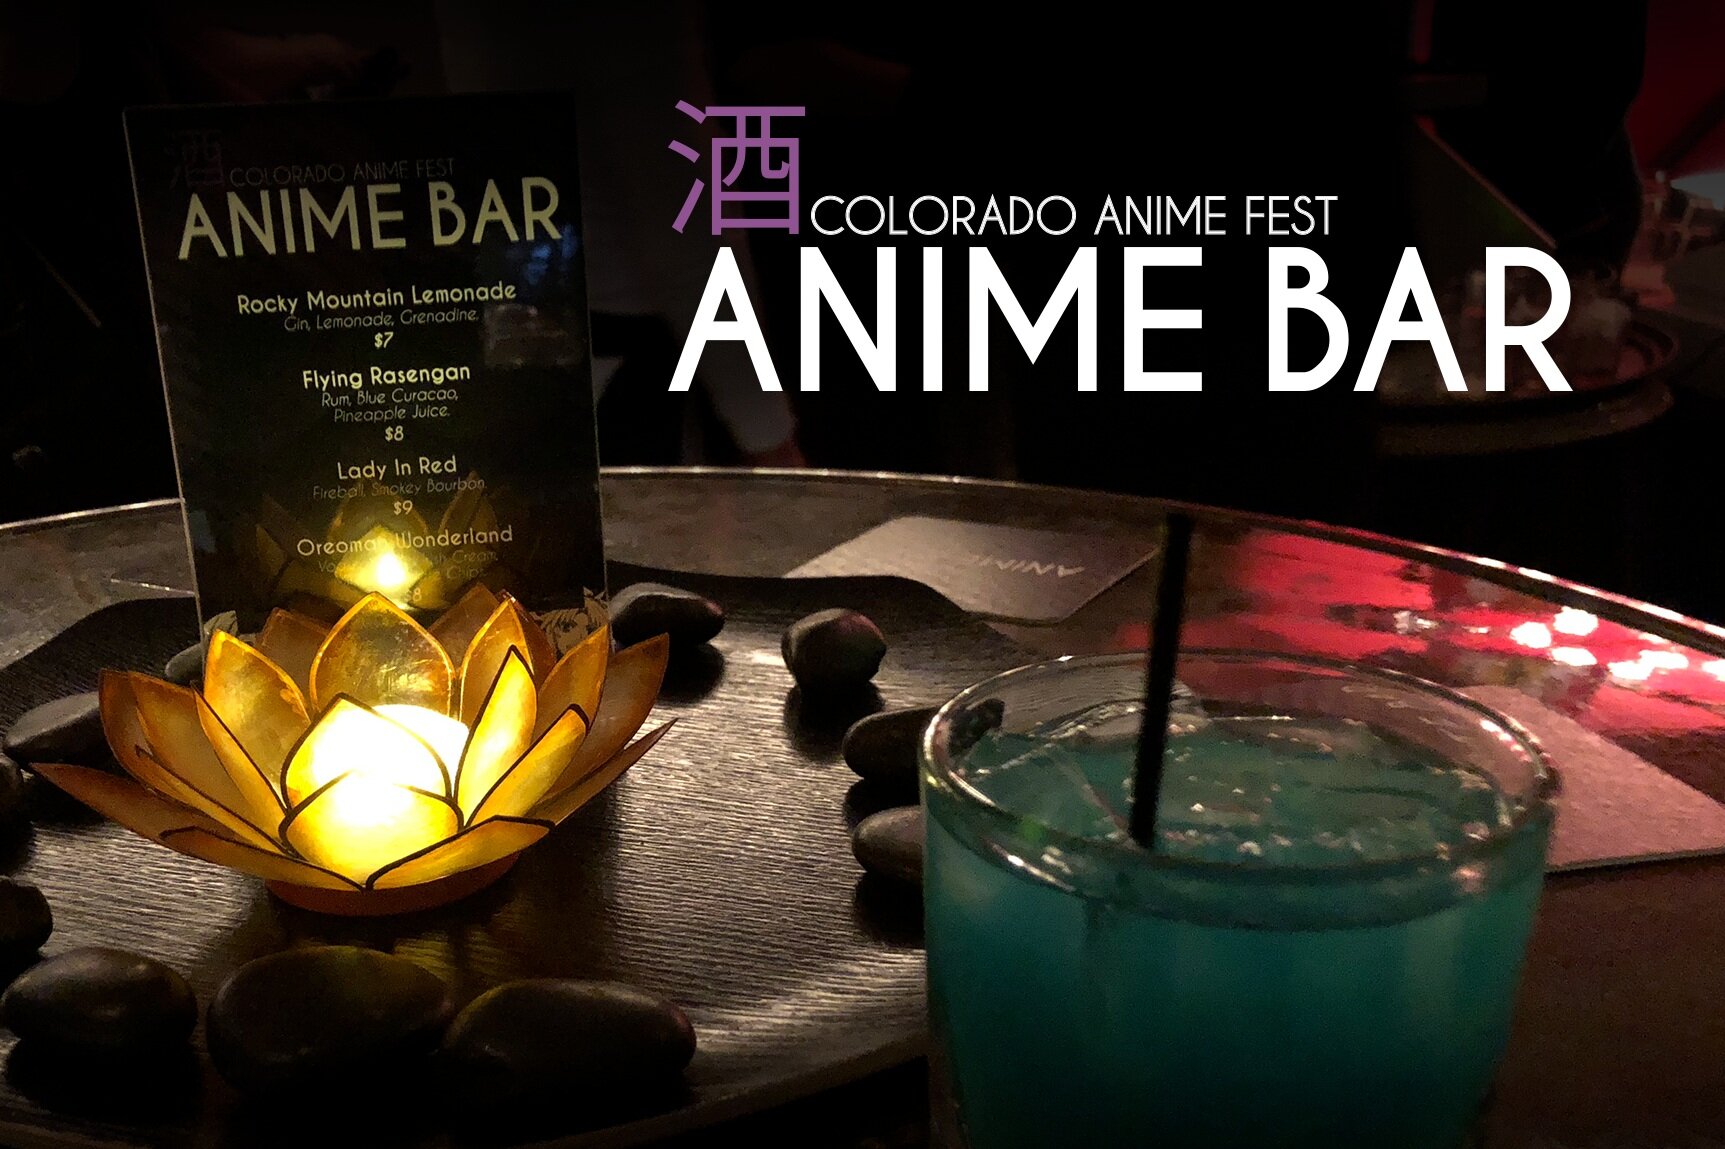 Anime Bar Colorado Anime Fest